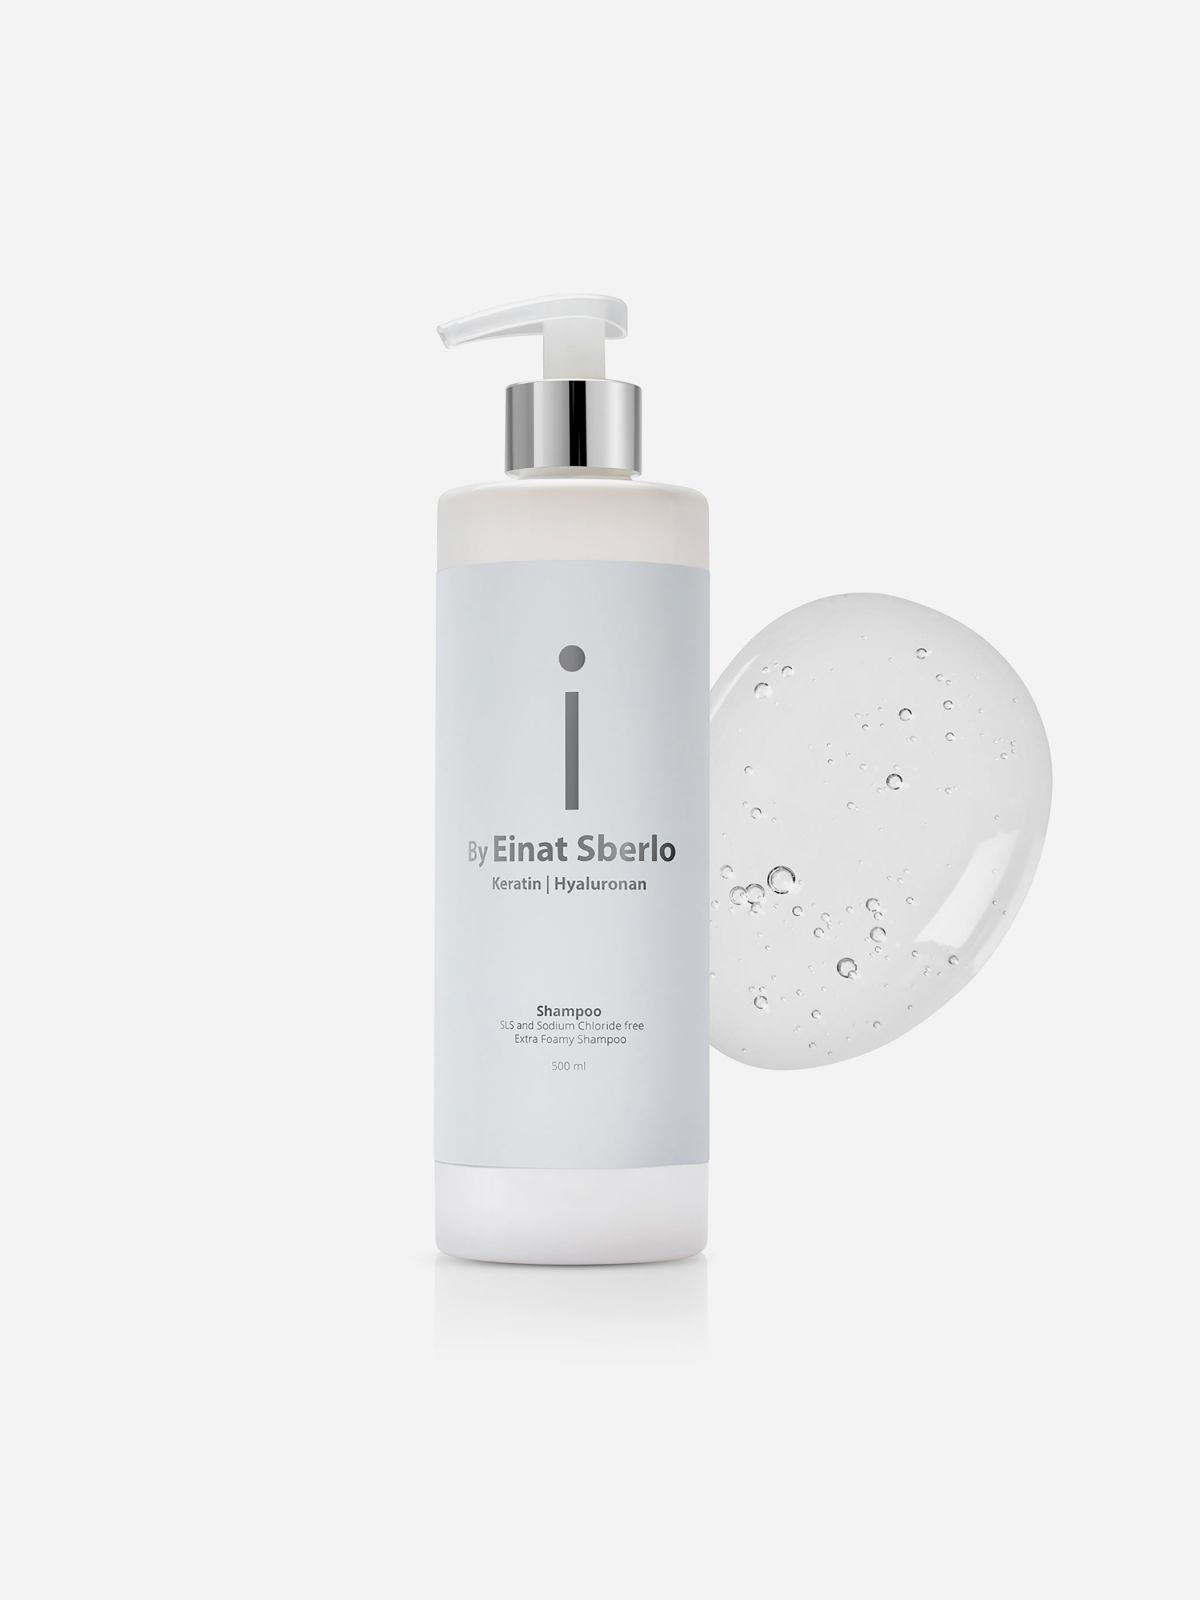  Shampoo SLS and Sodium Chloride free - שמפו טיפולי של I HAIR